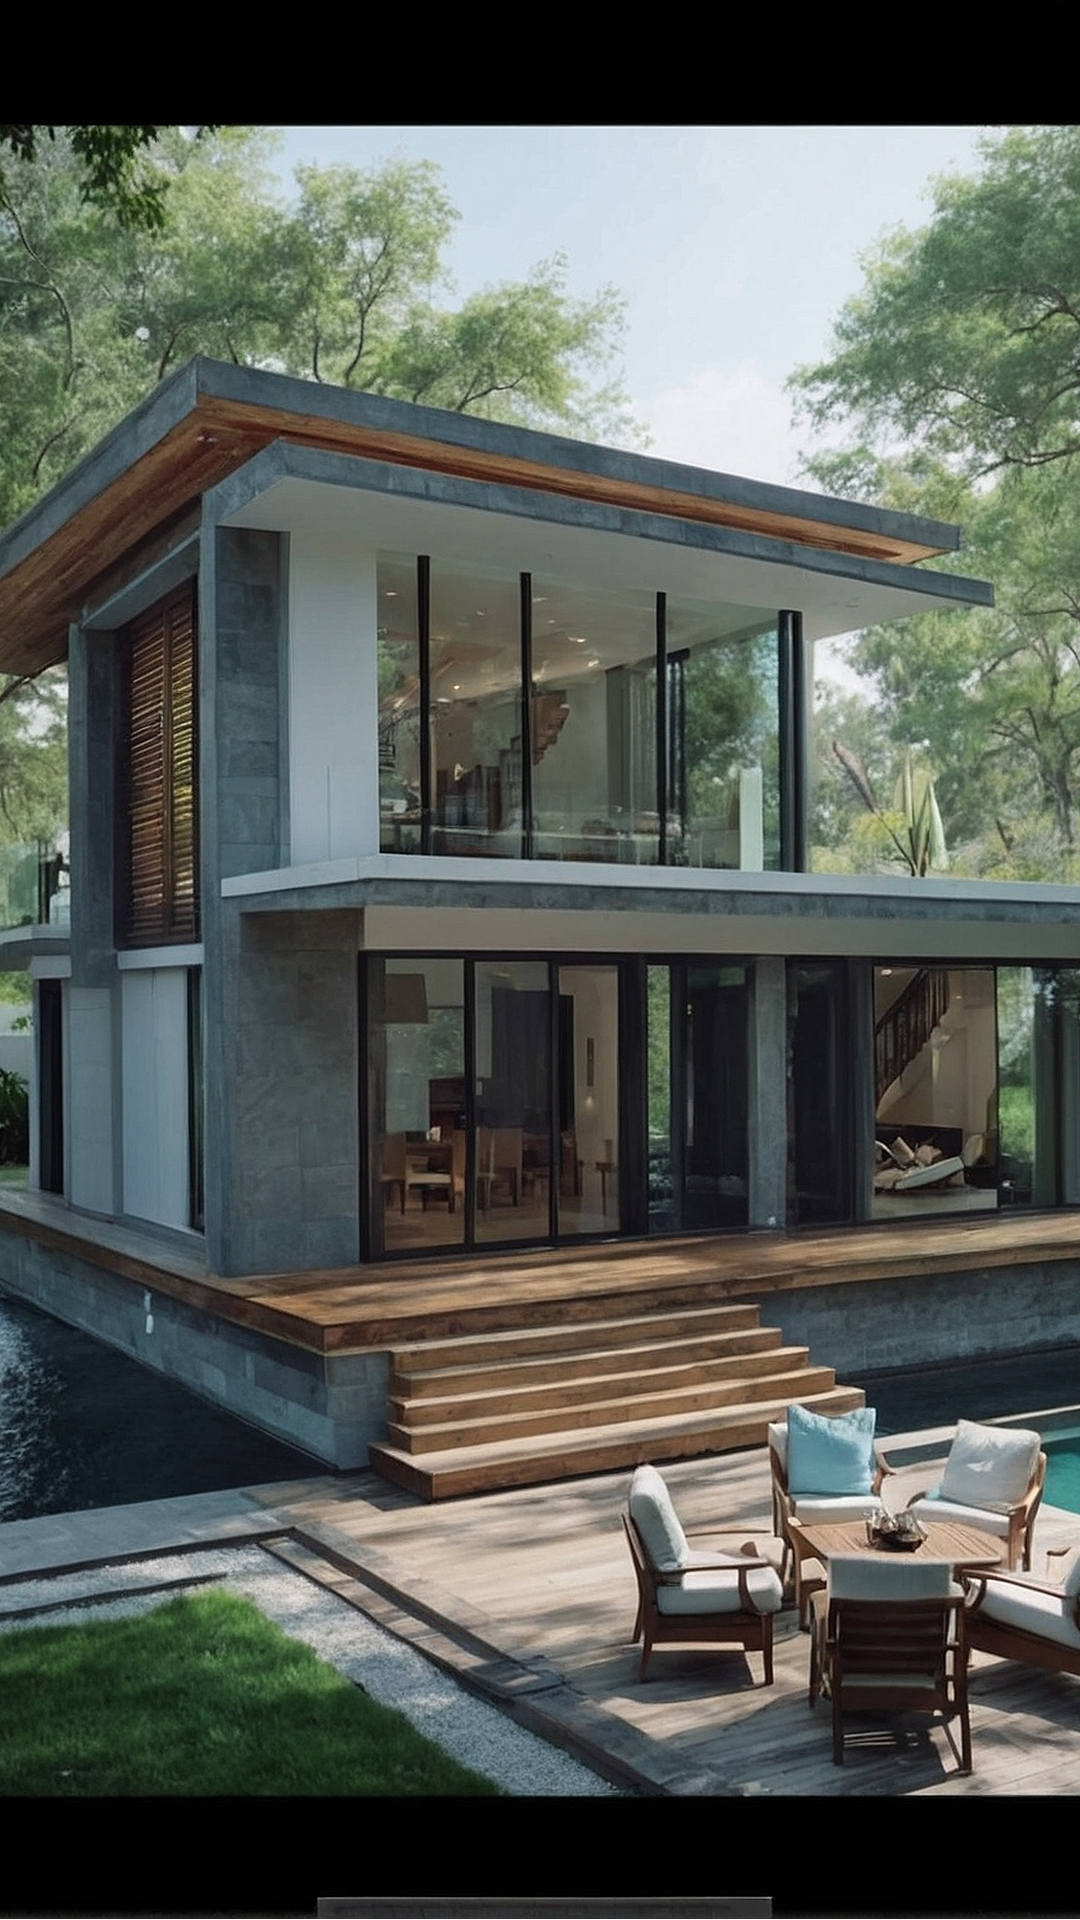 Vision Board Villas: Dream House Concepts